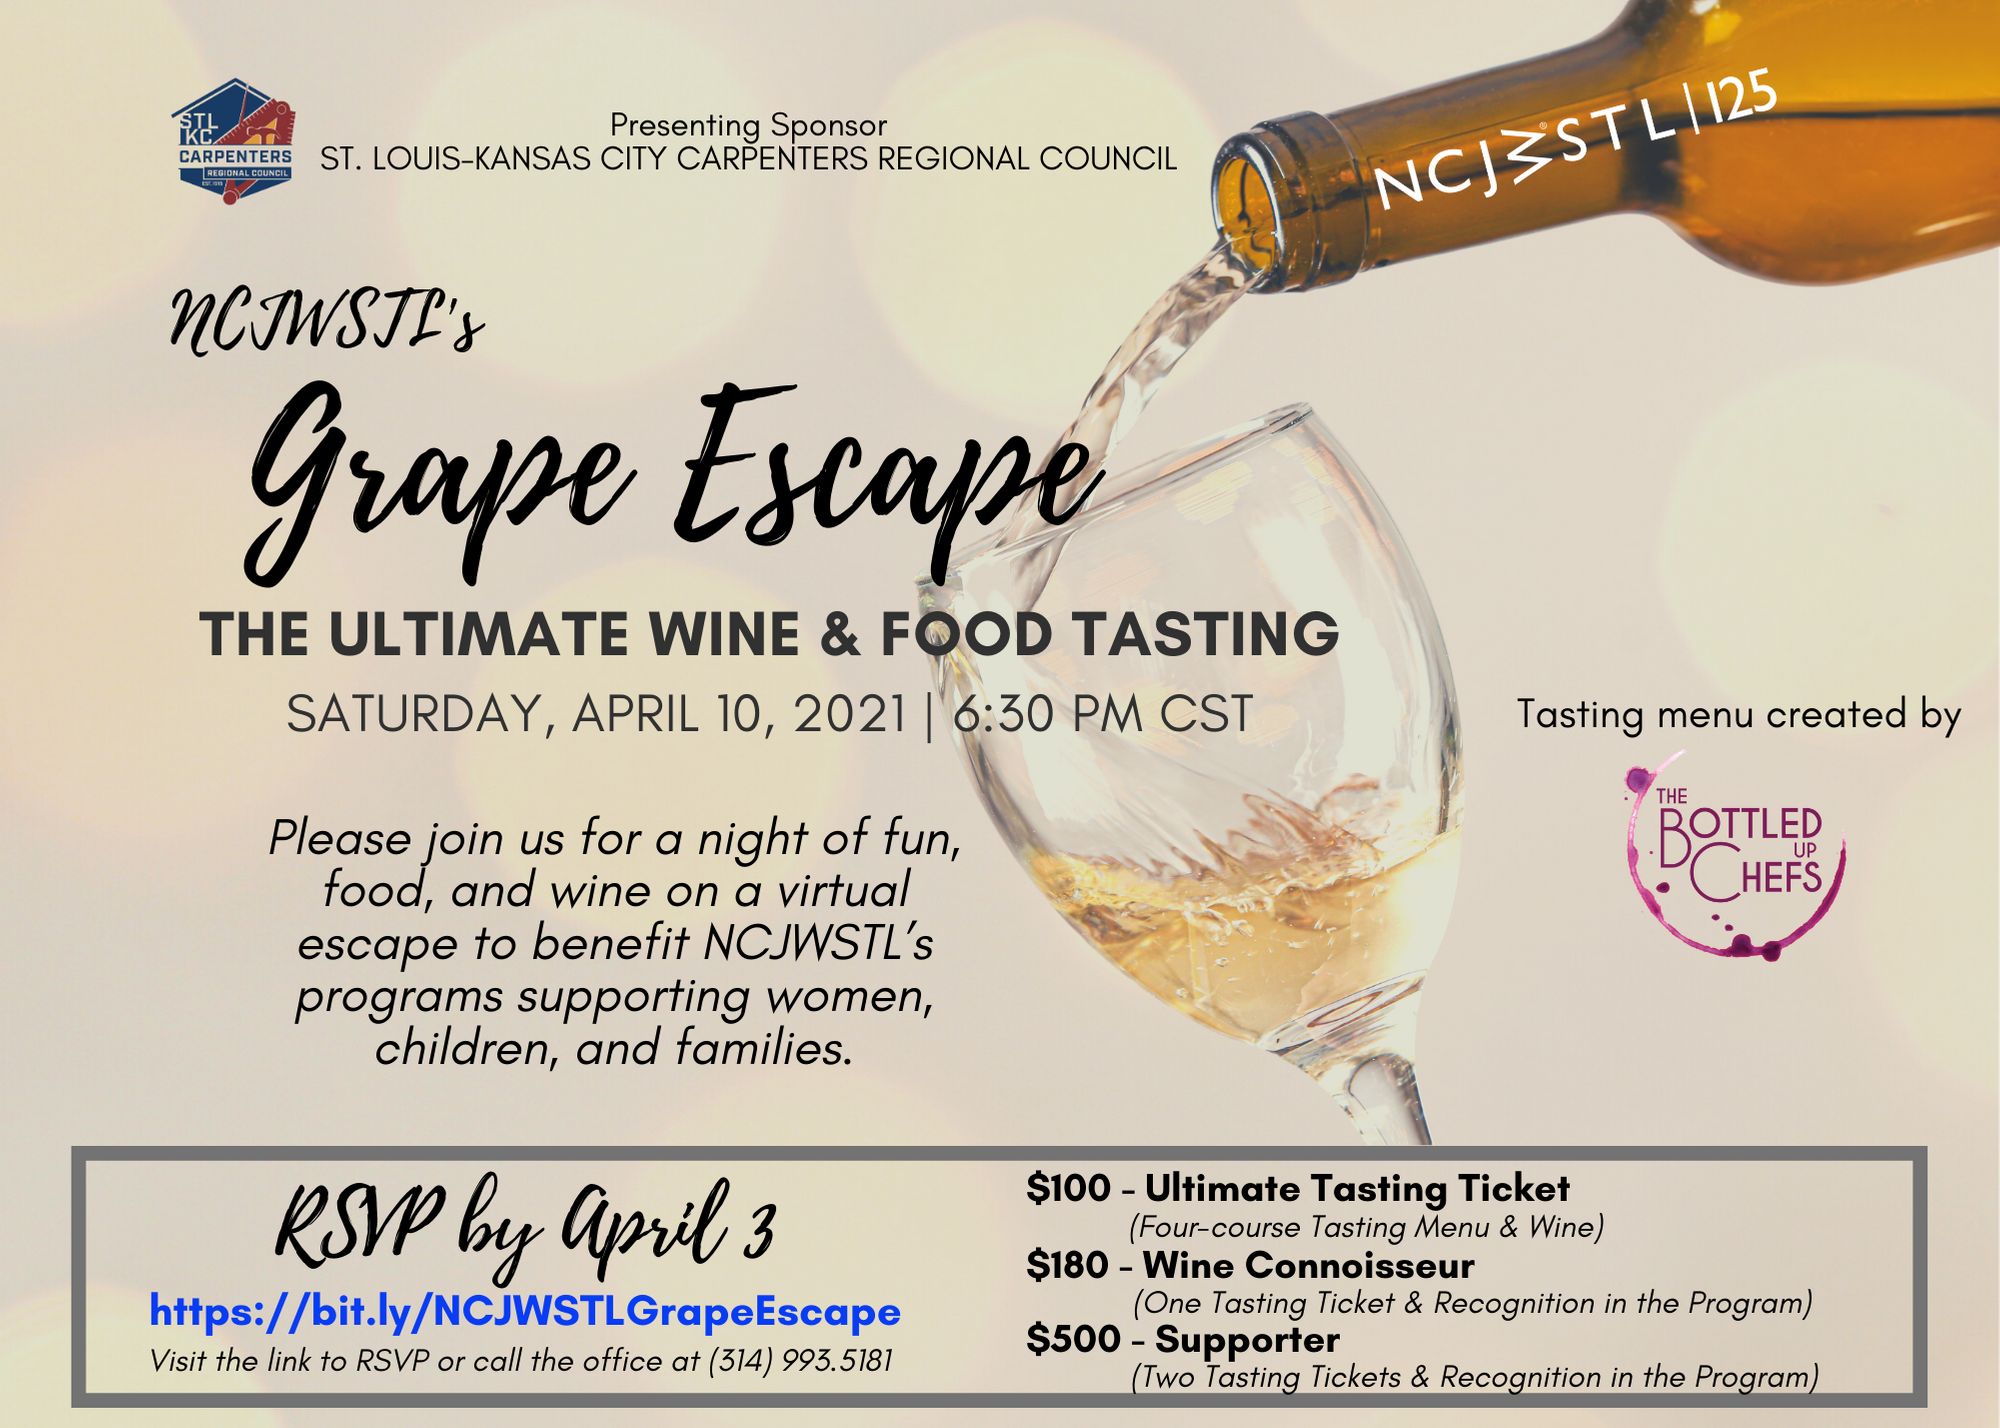 NCJWSTL's Grape Escape: The Ultimate Wine & Food Tasting